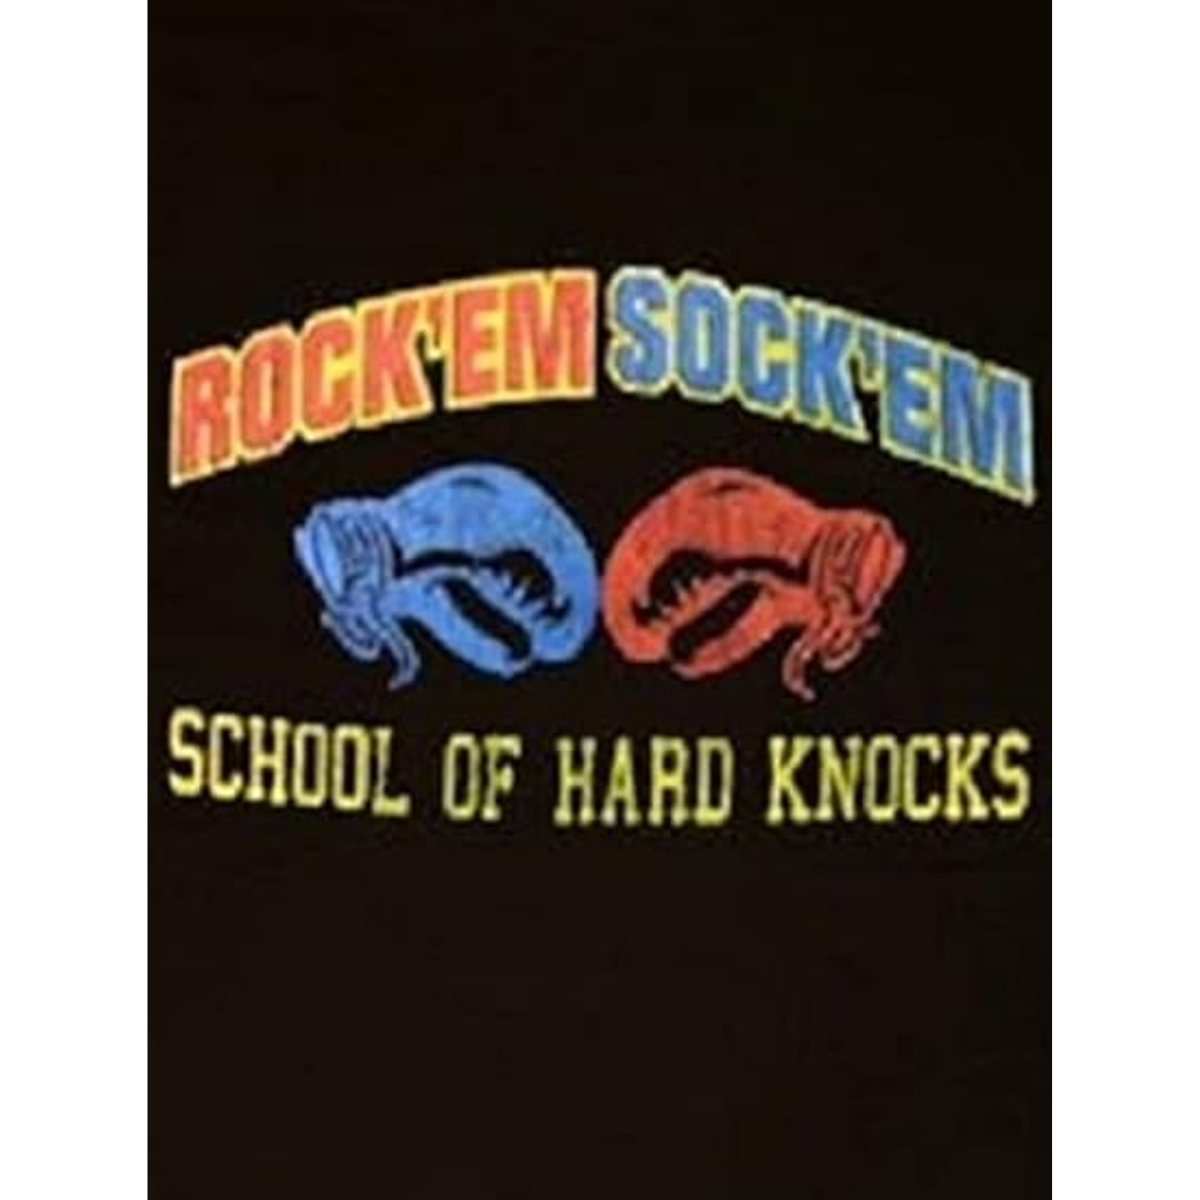 Rock'em Sock'em Robots Hard Knocks Black Tee T-Shirt